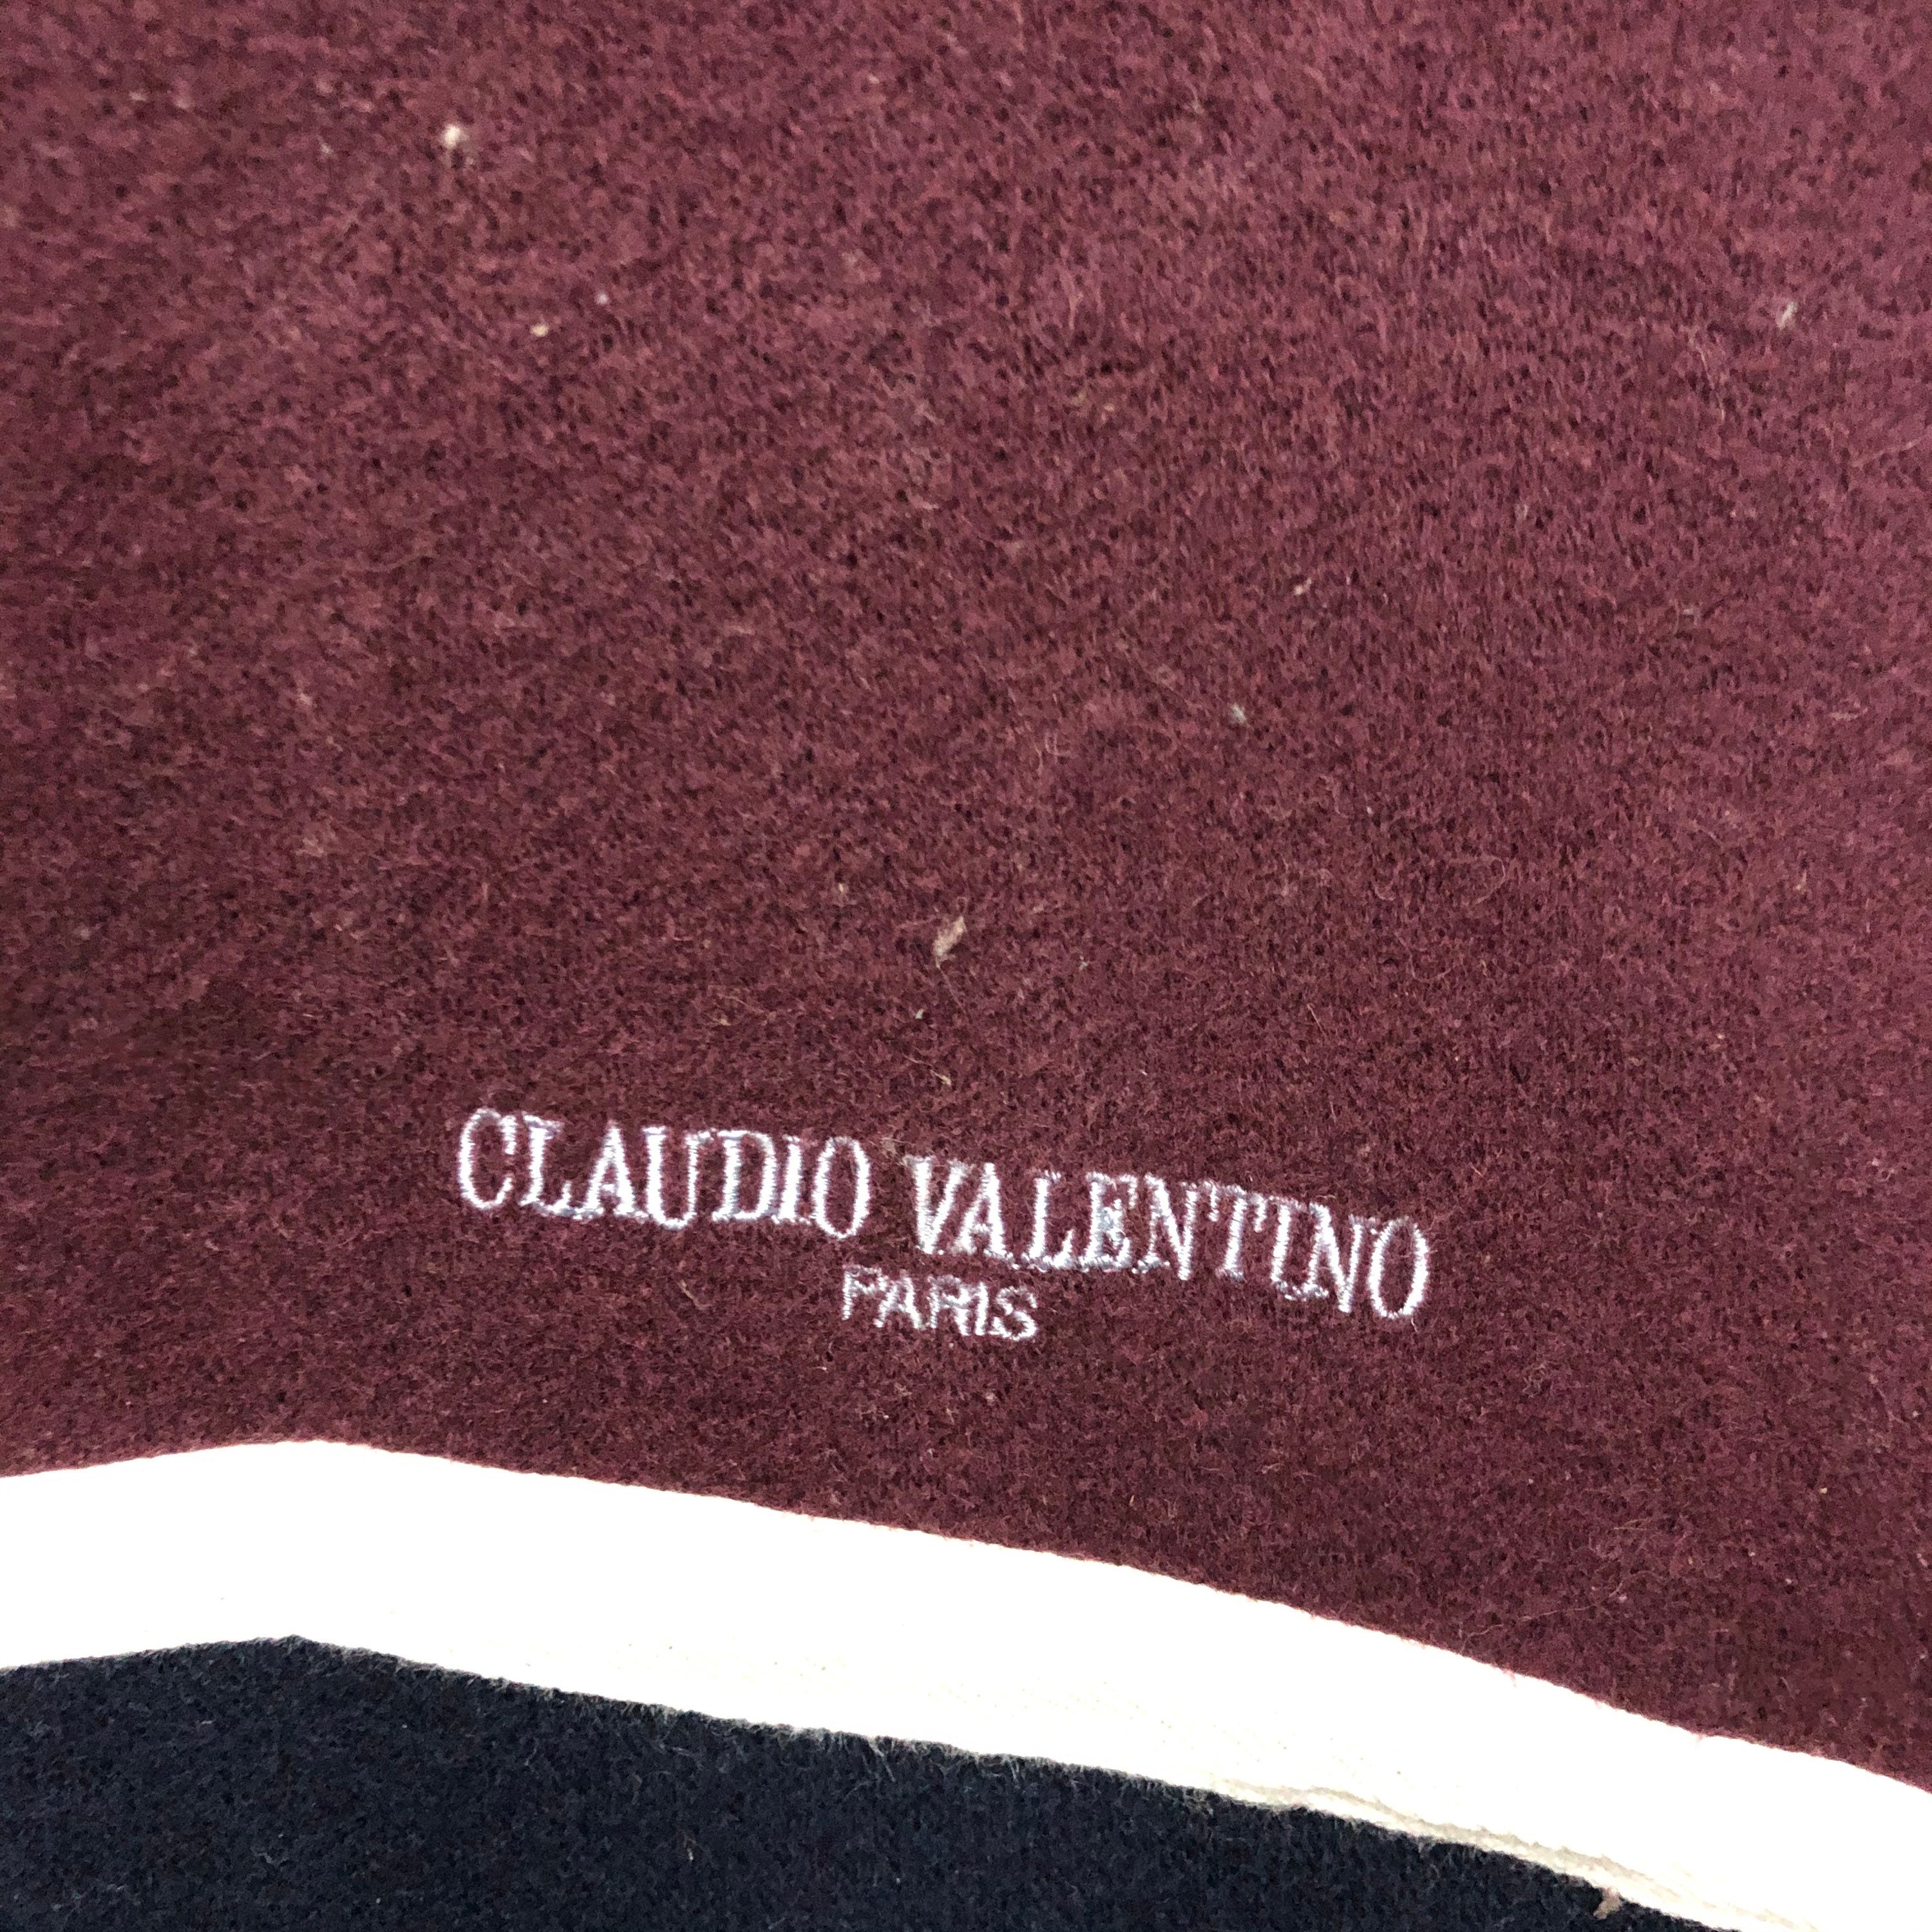 Rare claudio valentino sweatshirt small logo embroidered | Etsy